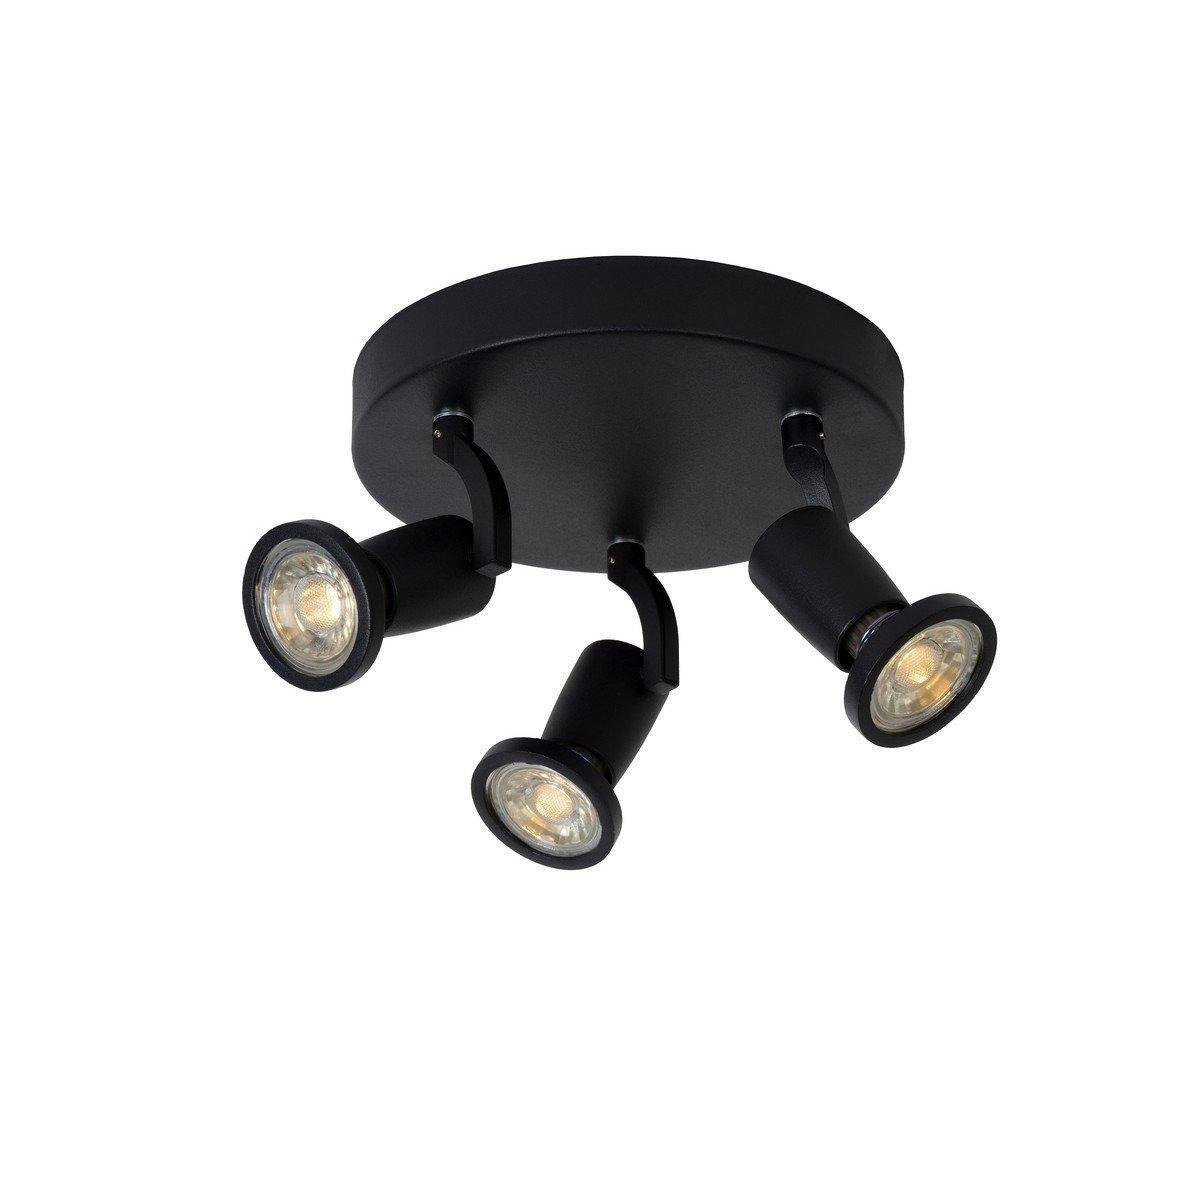 Lucide JasterLed Modern Ceiling Spotlight 20cm LED GU10 3x5W 2700K Black - image 1